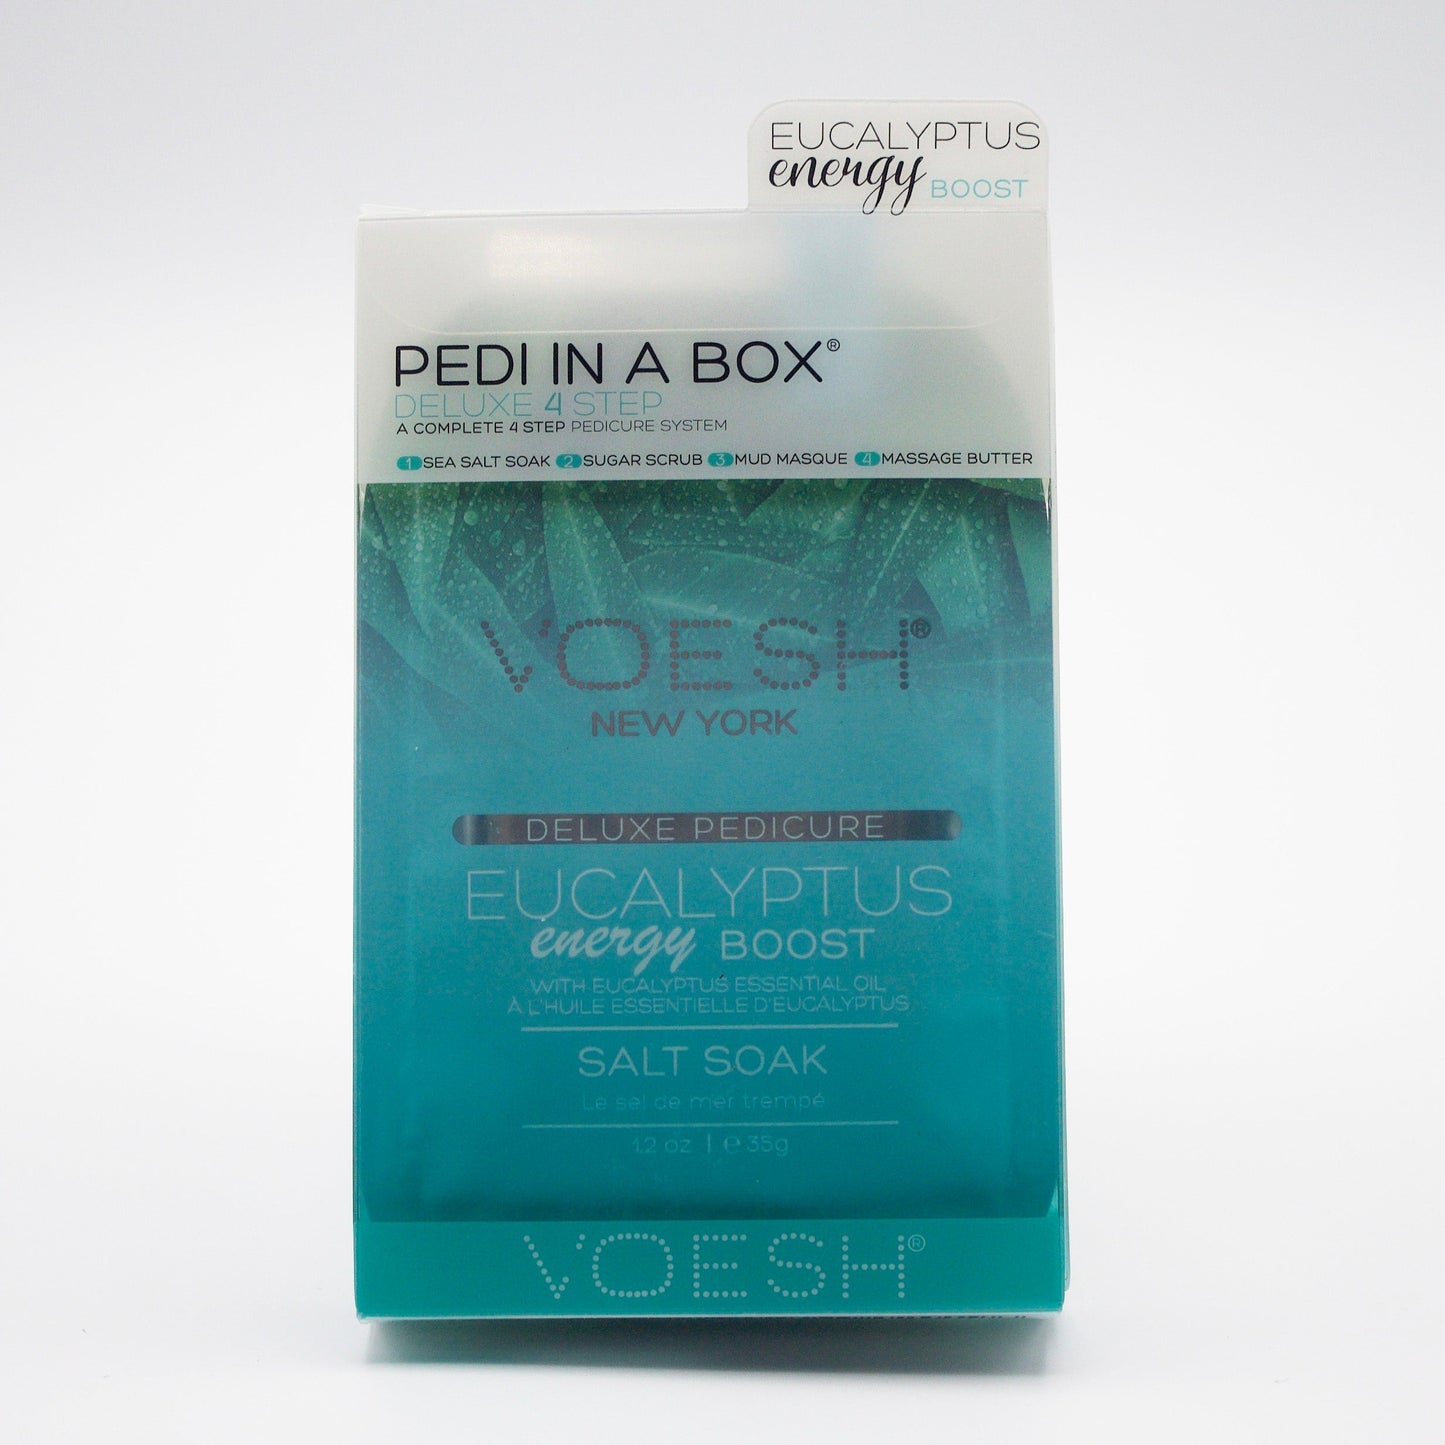 Pedi in a Box Eucalyptus Energy Boost